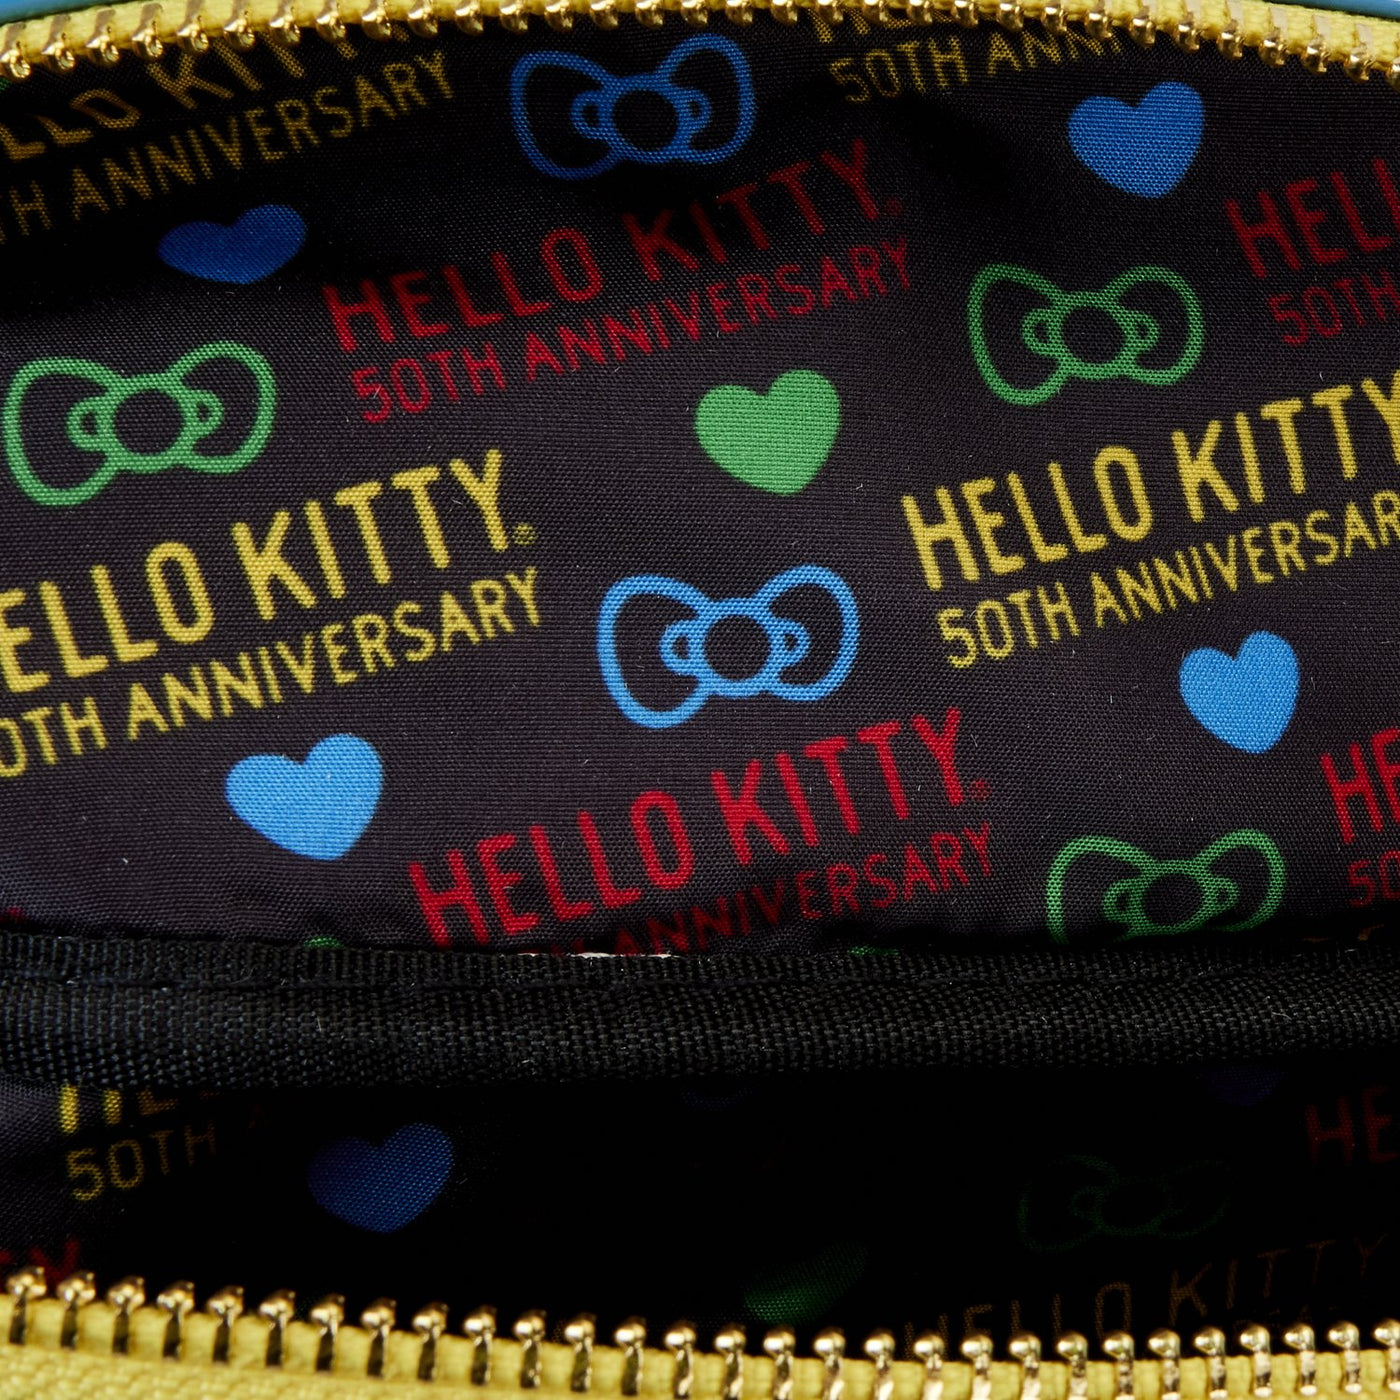 Loungefly Sanrio Hello Kitty 50th Anniversary Cosplay Convertible Belt Bag - Interior Lining